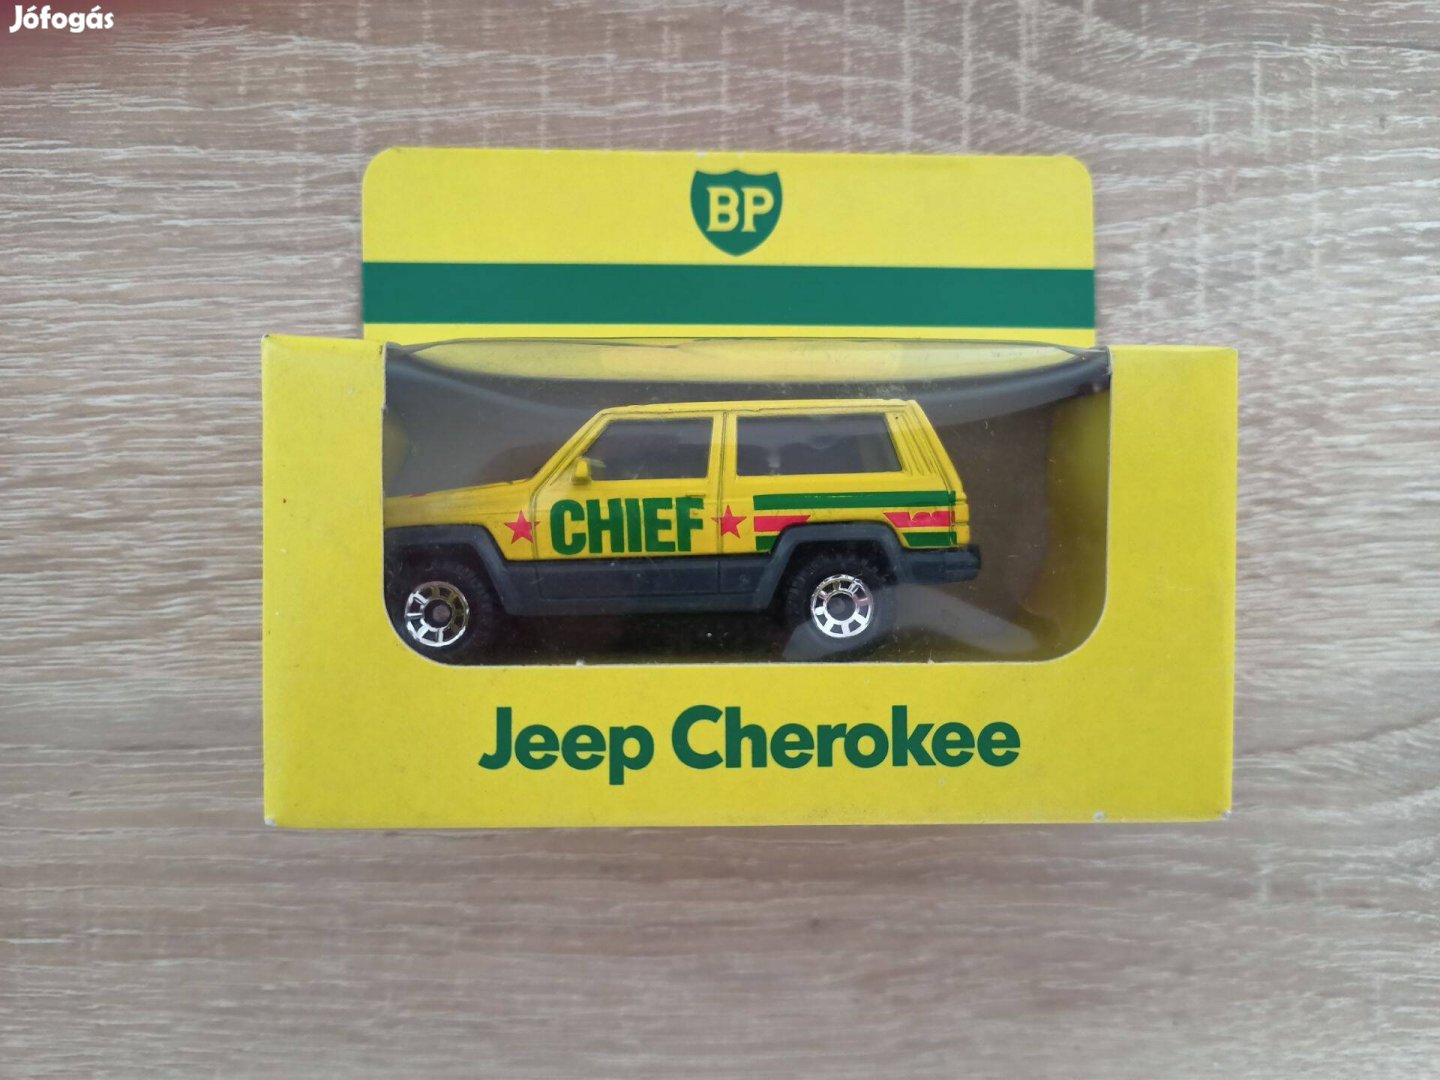 Matchbox Superfast No. 27 Jeep Cherokee "BP" bontatlan